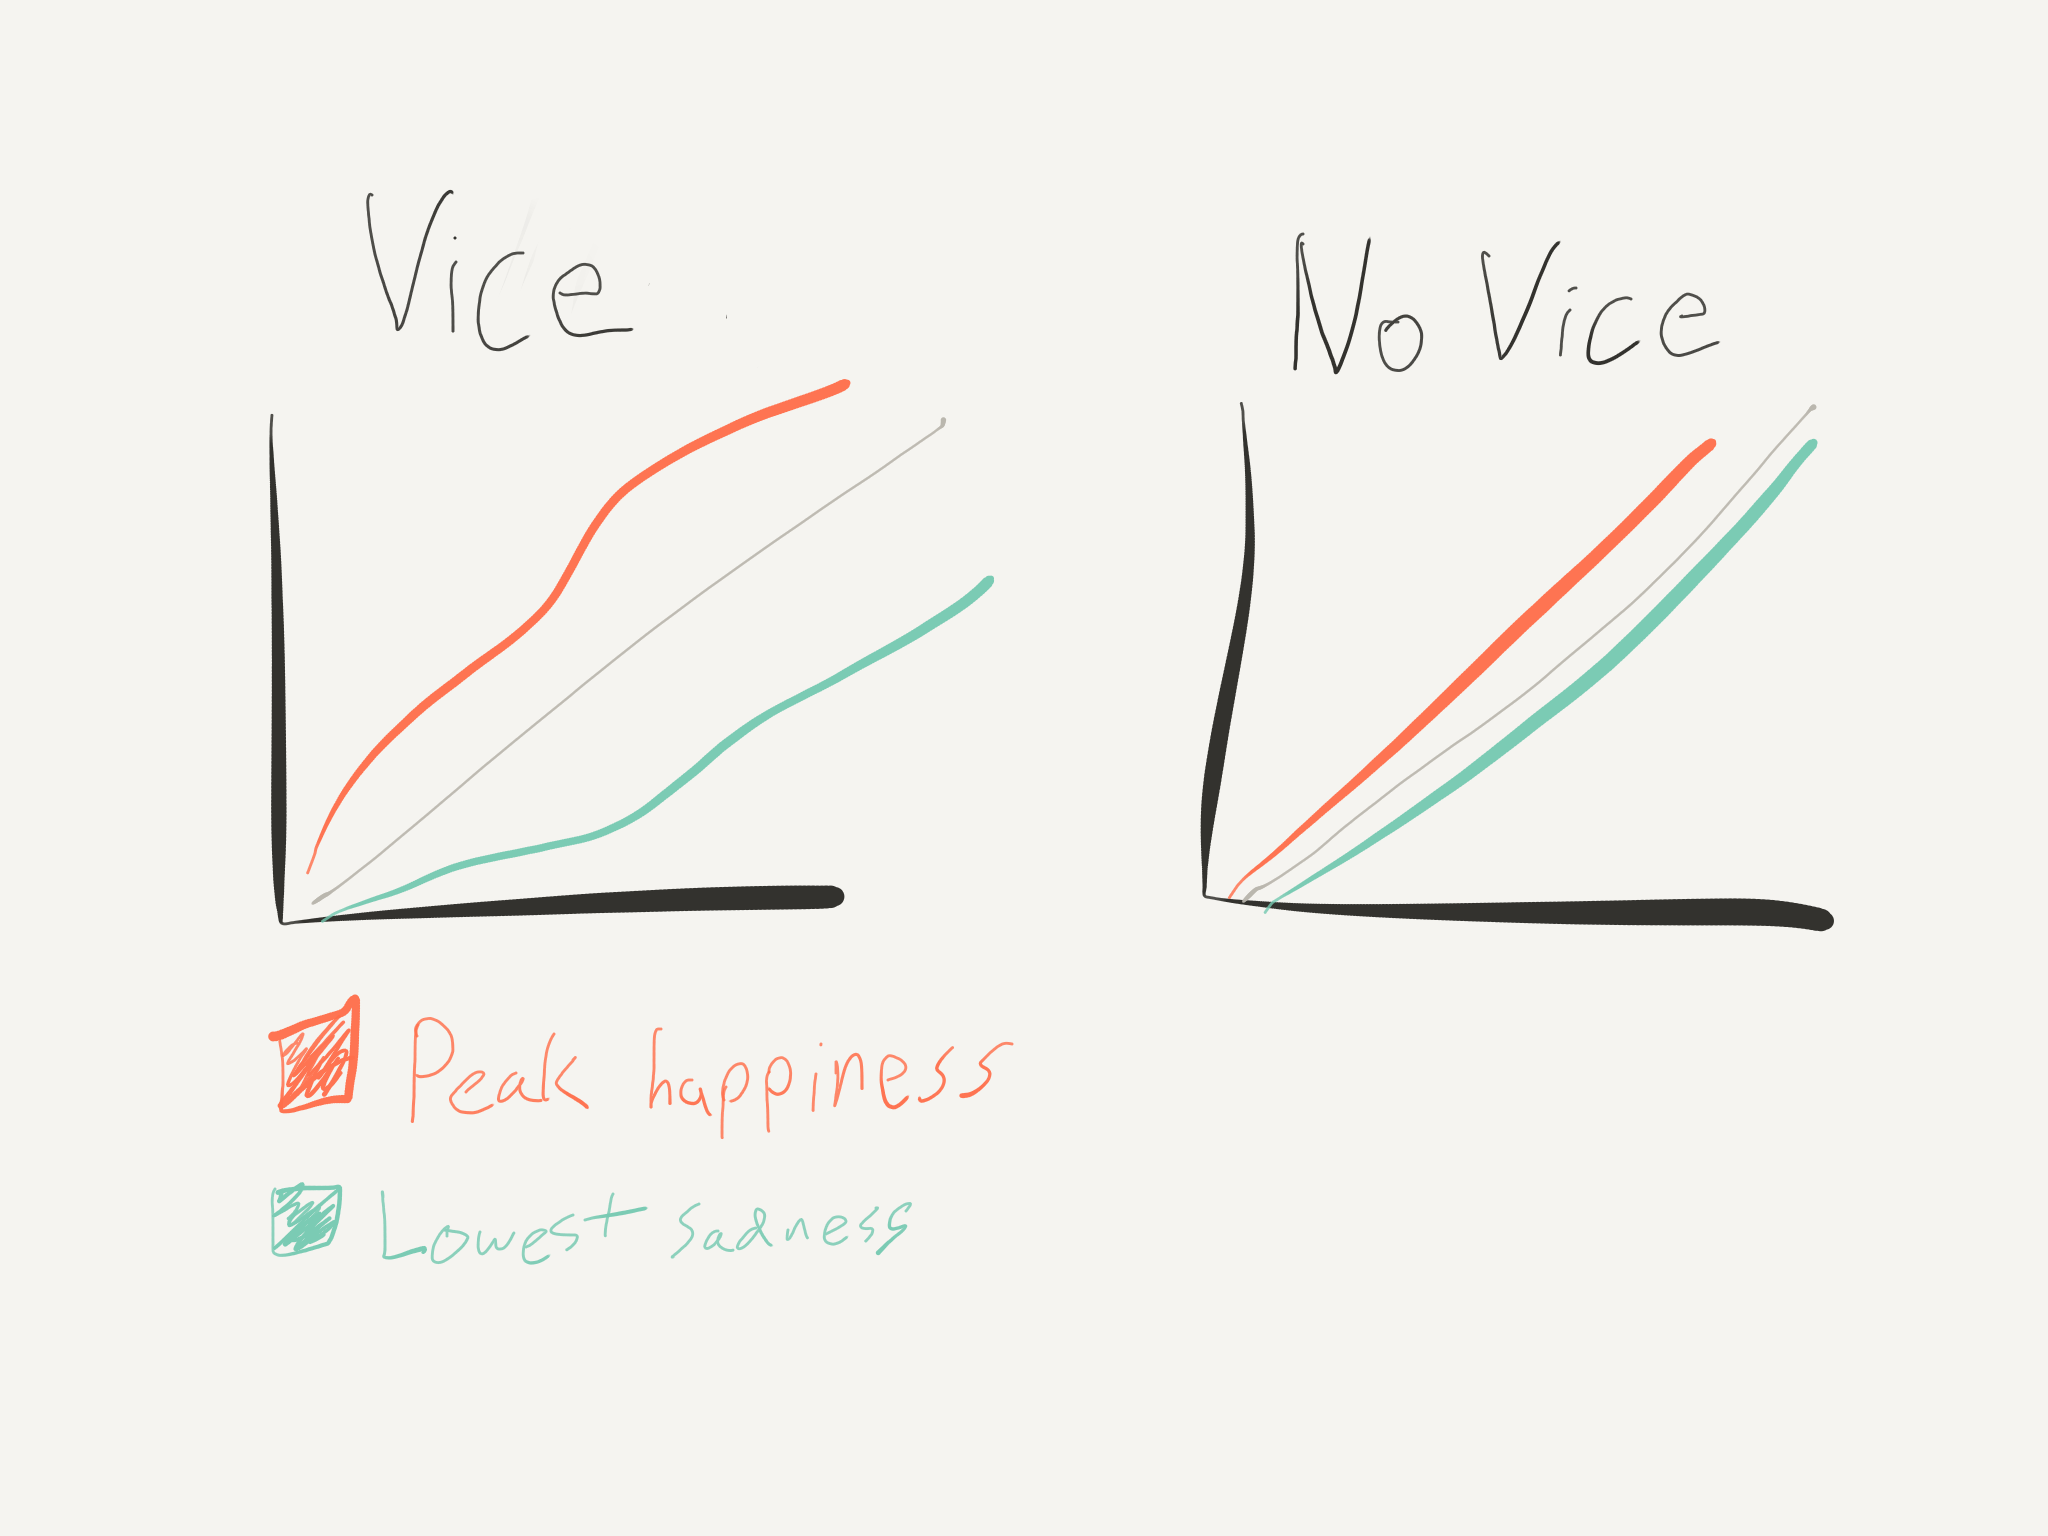 Vice vs no vice happiness